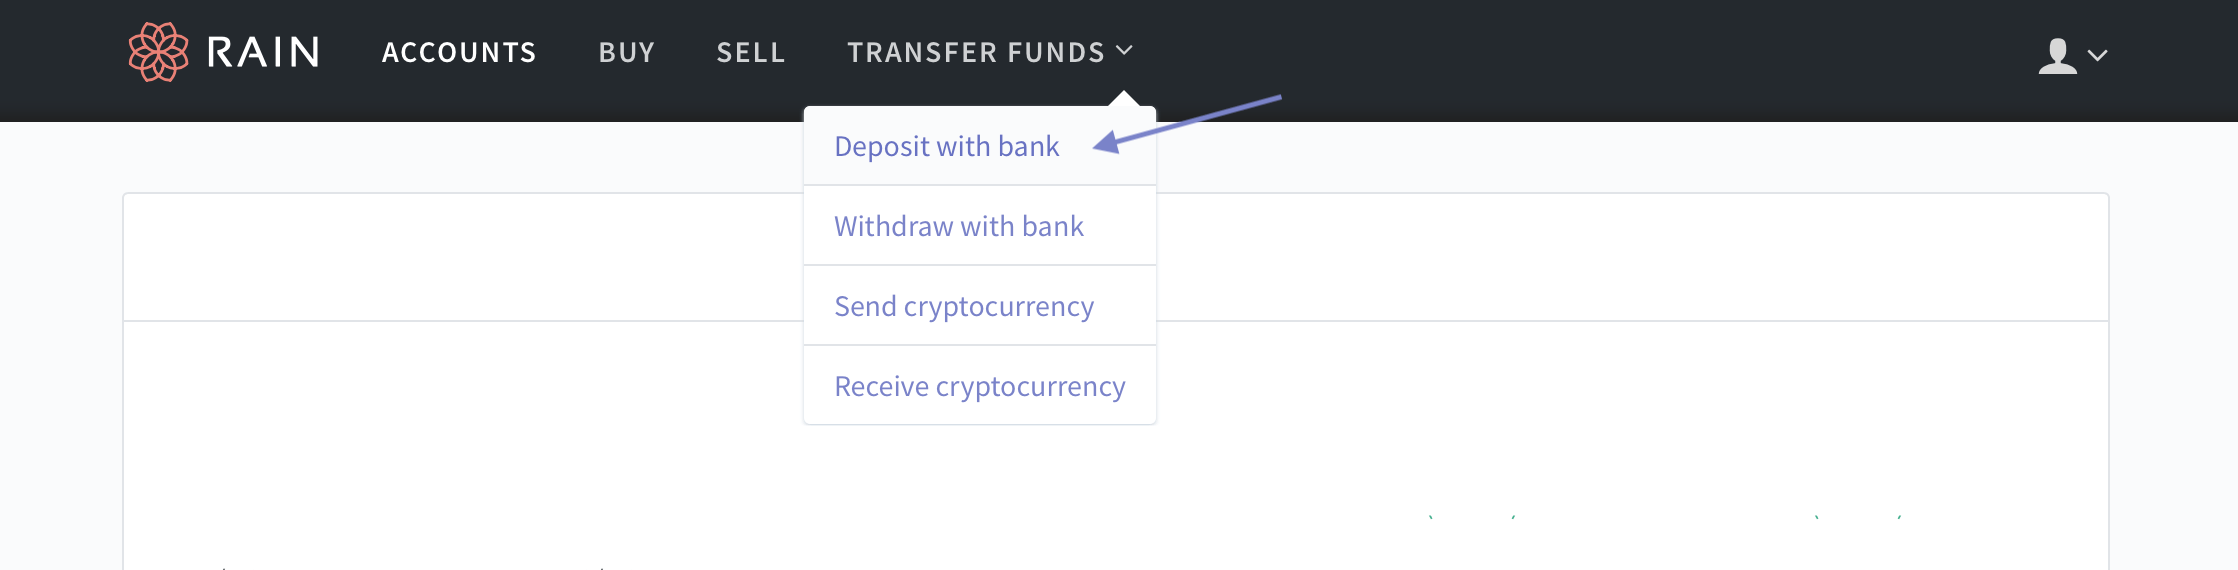 screenshot transfer options